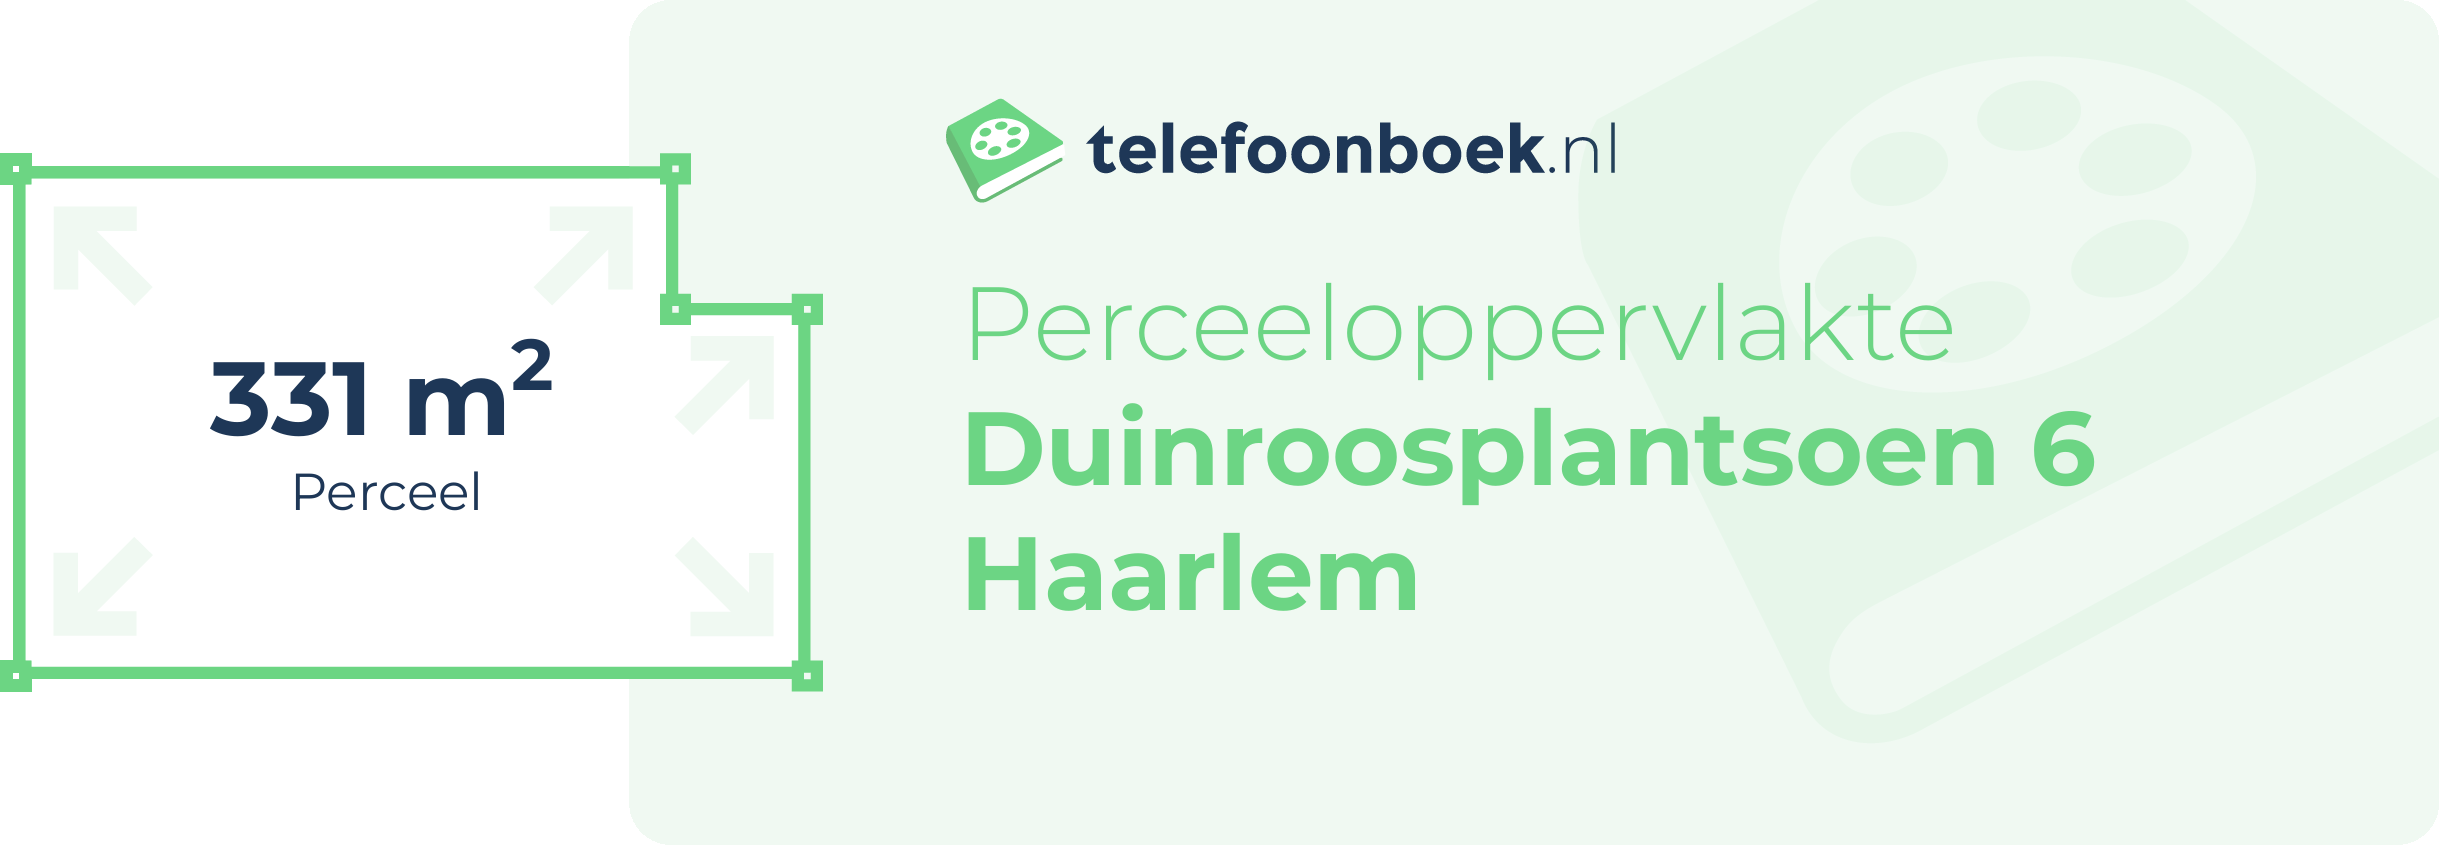 Perceeloppervlakte Duinroosplantsoen 6 Haarlem